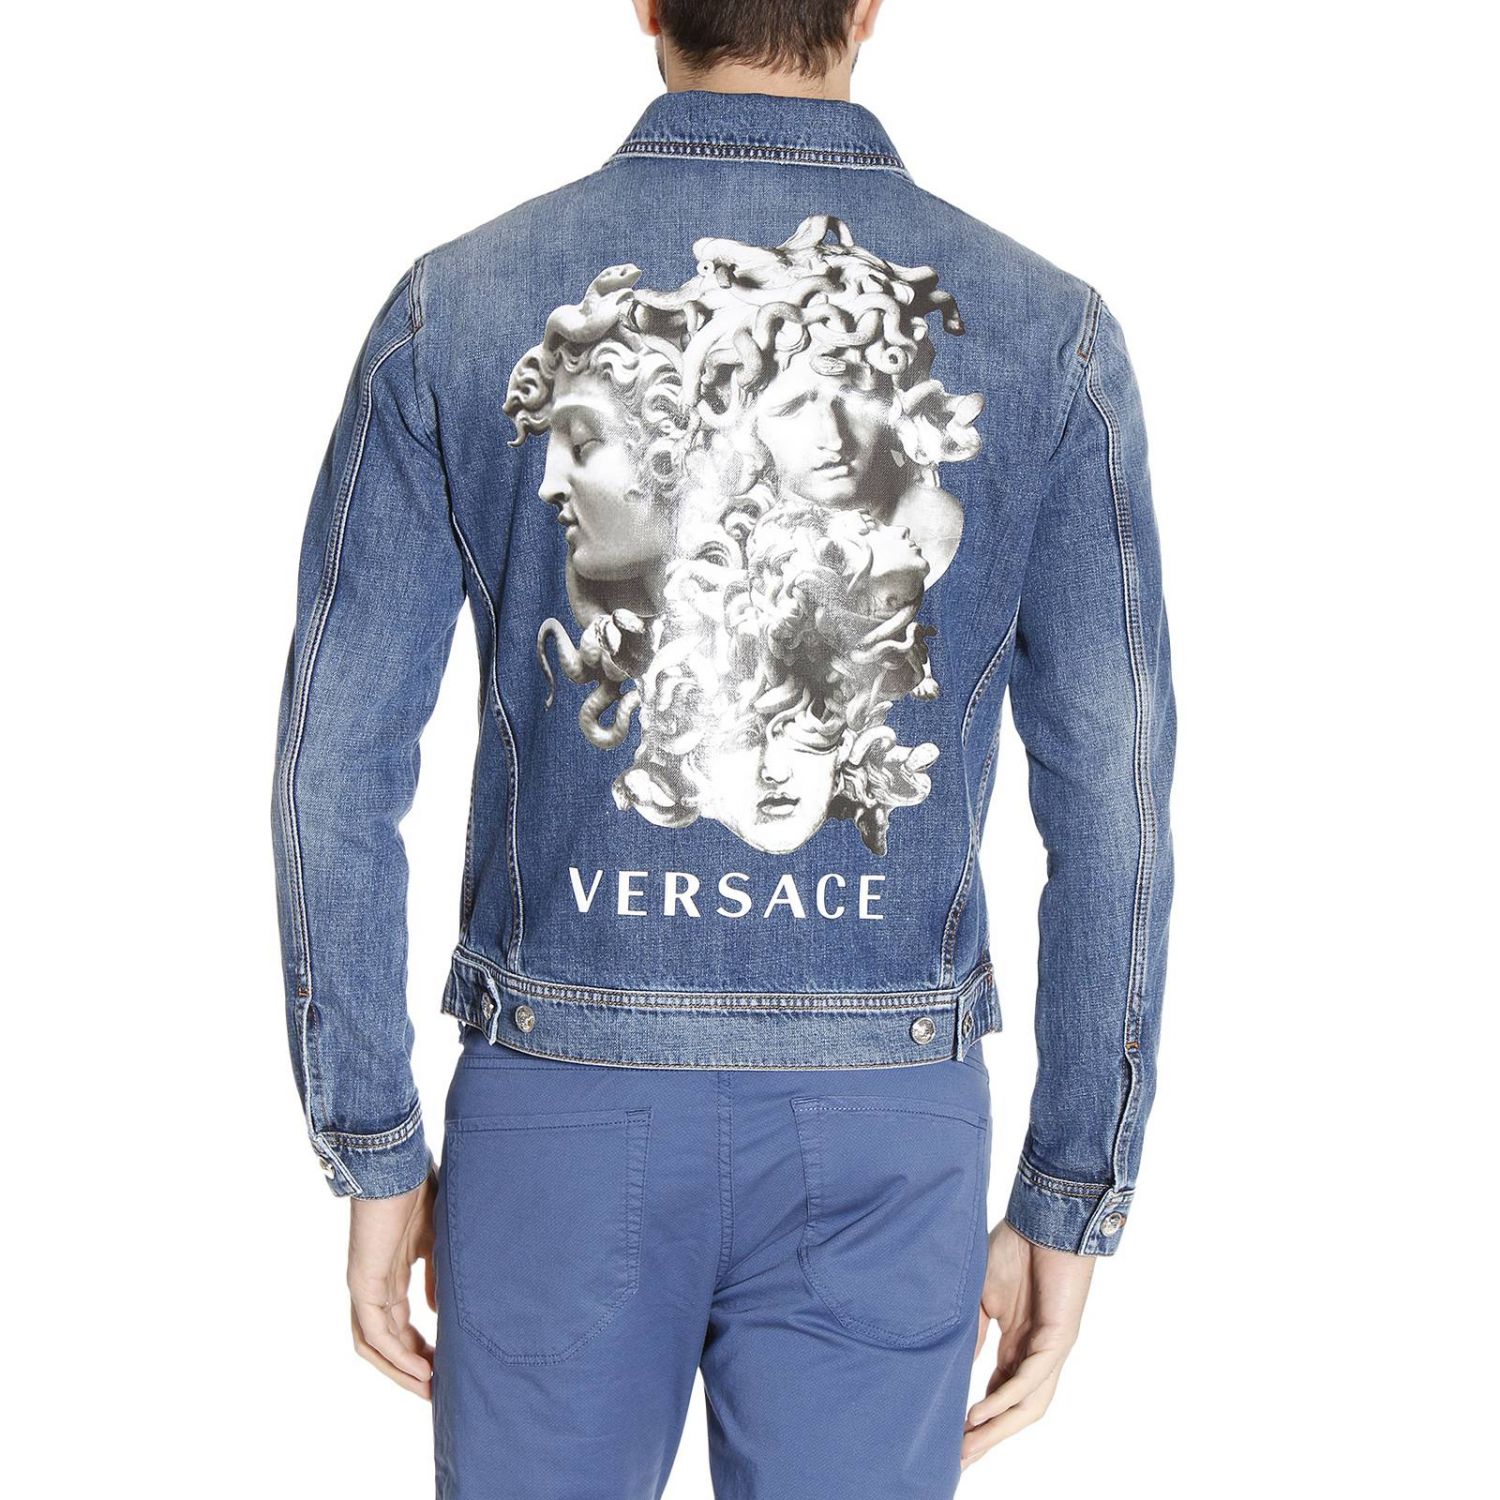 versace jeans jacket mens